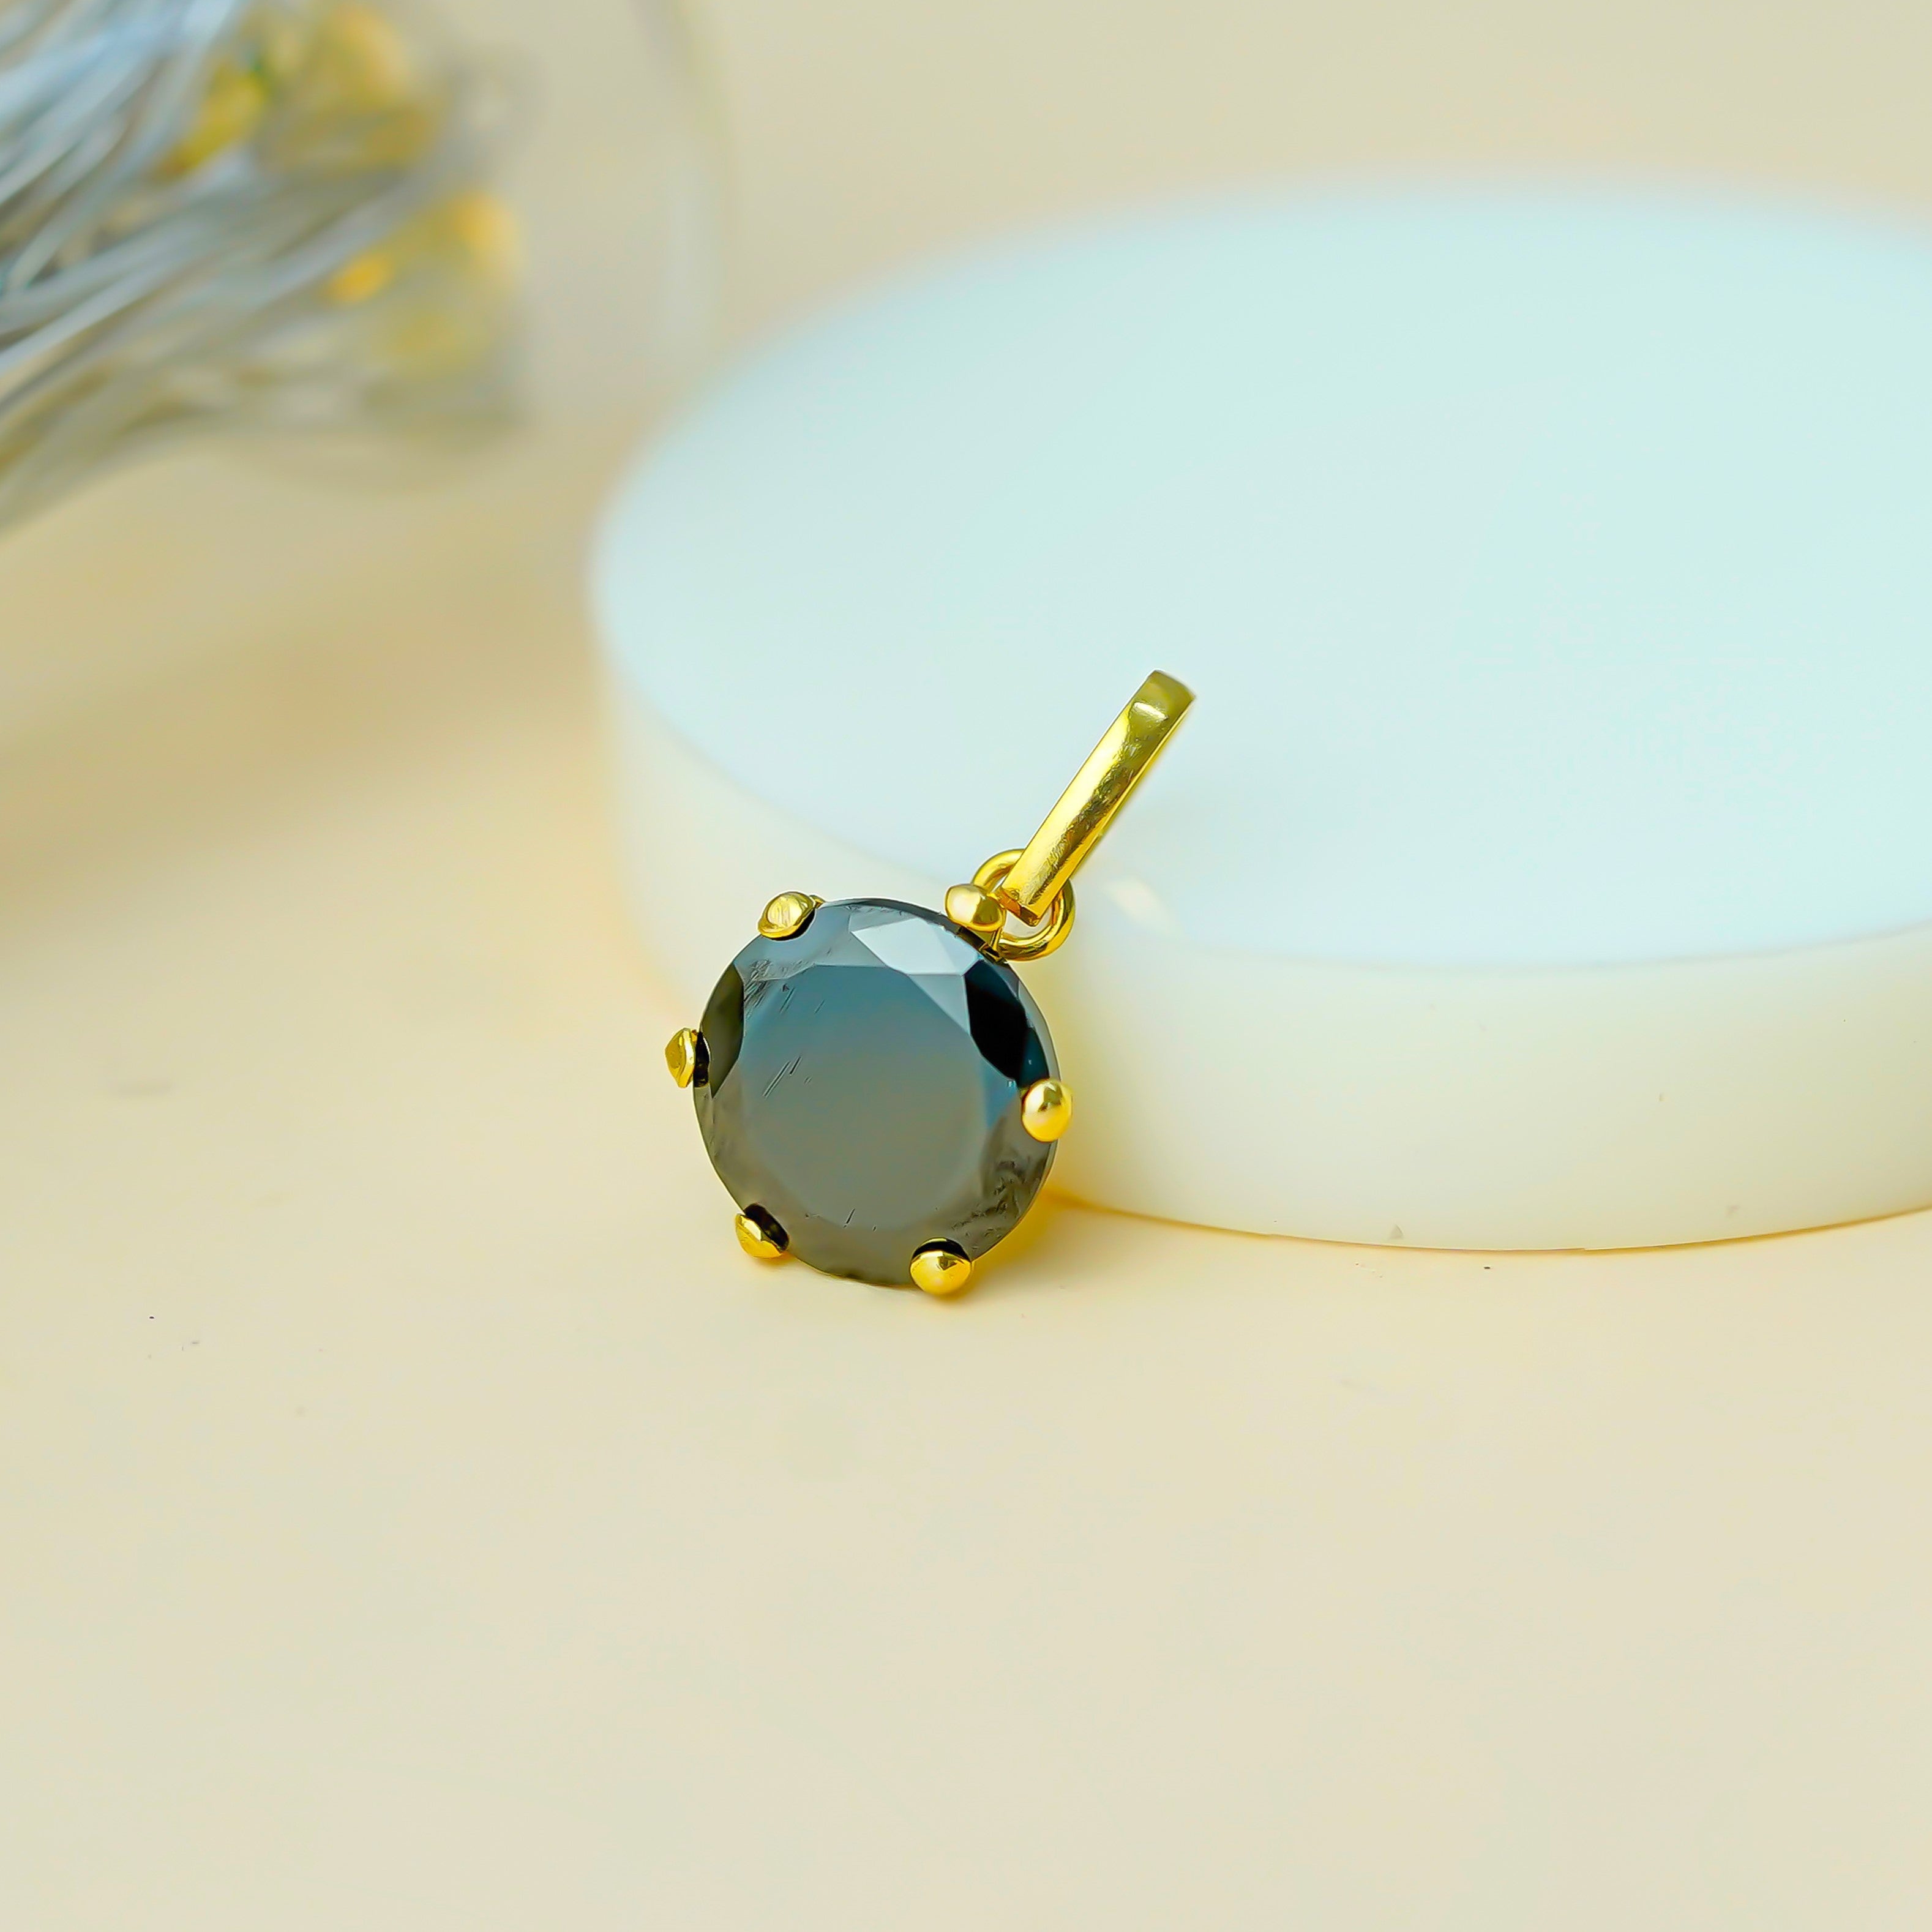 10 KT Gold Black Round Diamond Pendant & Earring Set